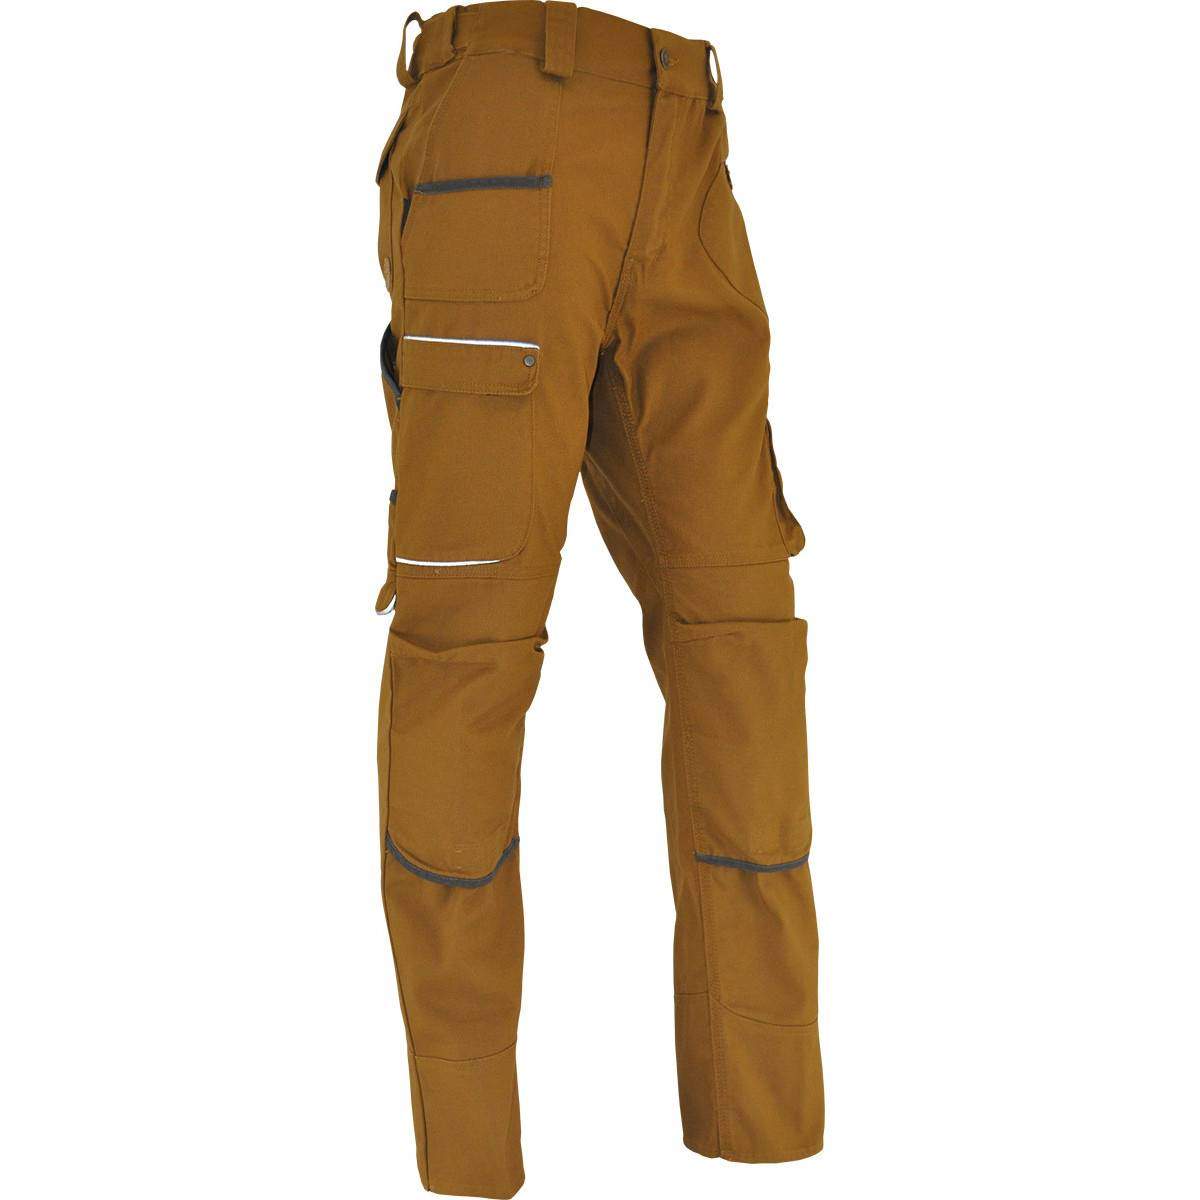 Pantalones de trabajo SAHARA talla 44, bronce